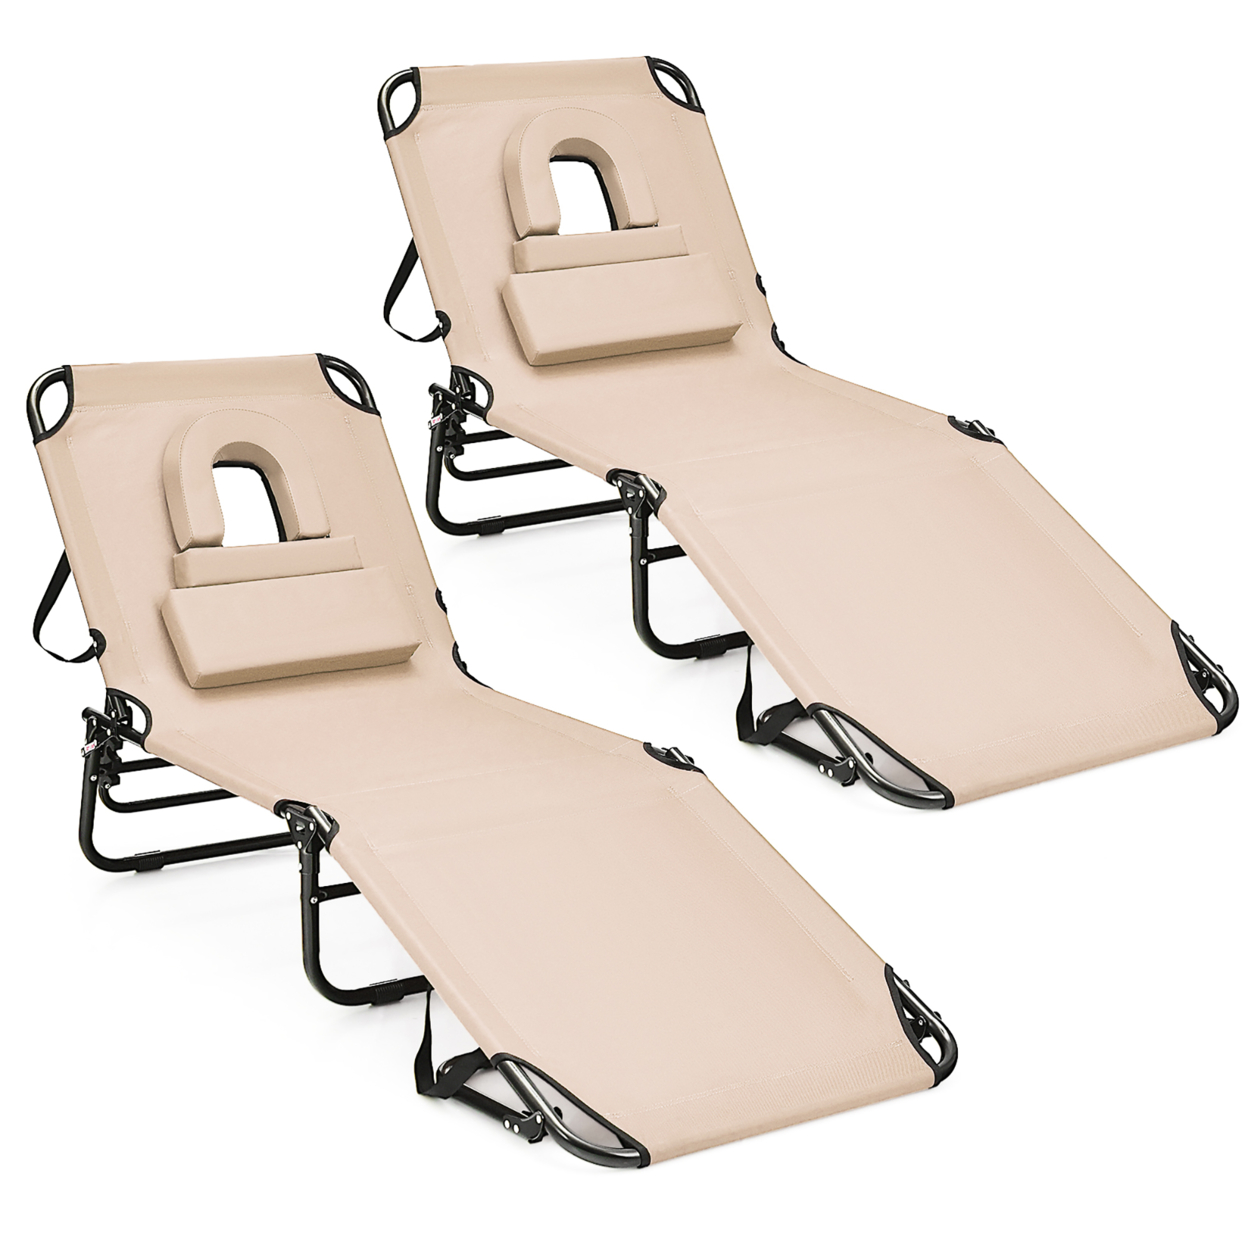 2PCS 5-Position Lounge Chair Adjustable Beach Chaise W/ Face Cavity & Pillows - Beige,Black